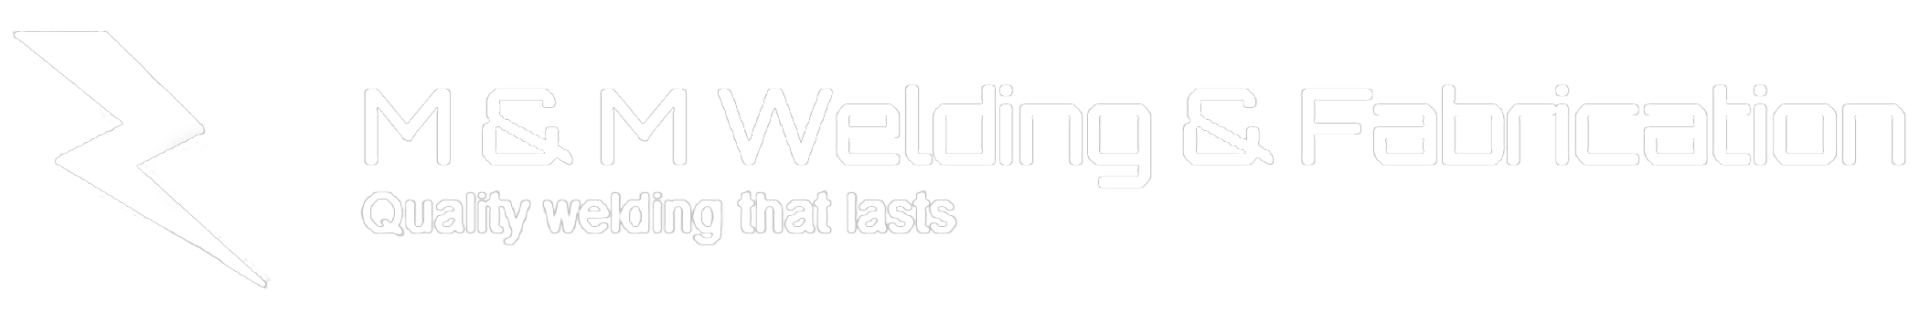 M & M Welding & Fabrication, Quality welding that lasts logo